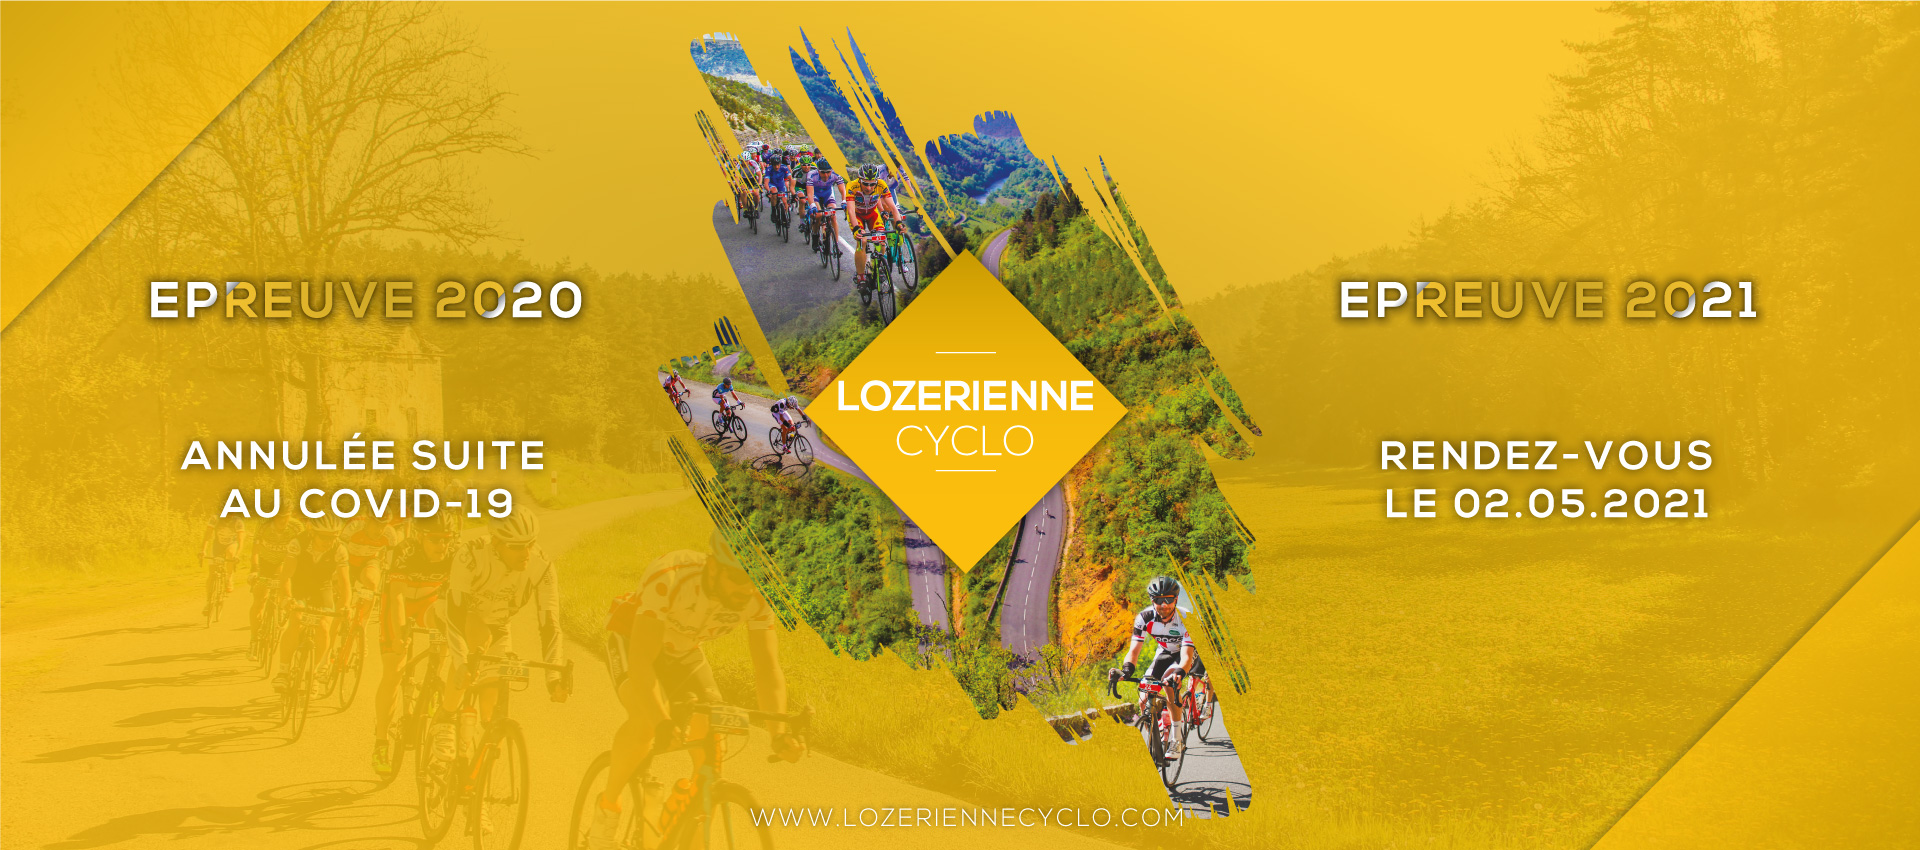 Featured image for “La Lozérienne Cyclo annulée”